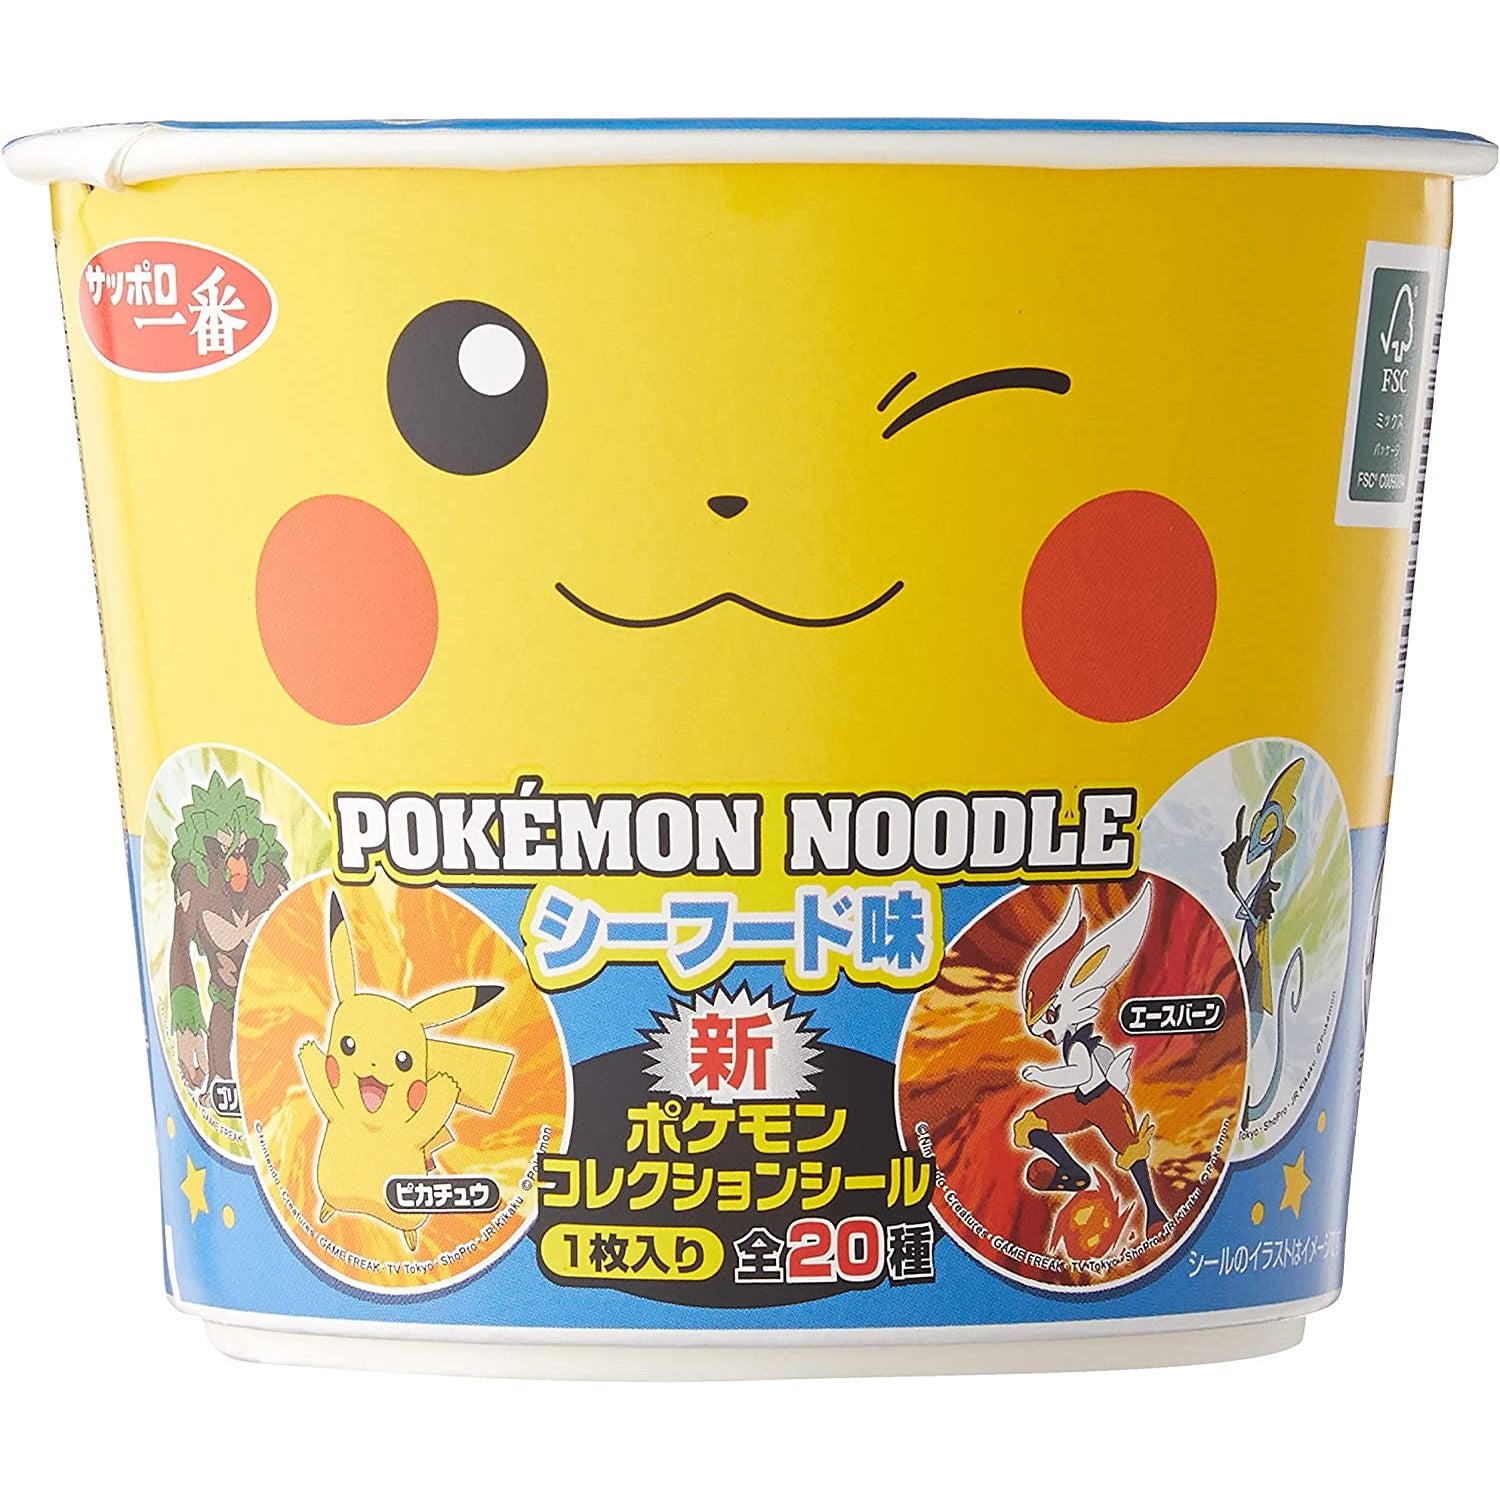 Sapporo Ichiban Pokémon Noodles Seafood Flavour (Japan) (38g)